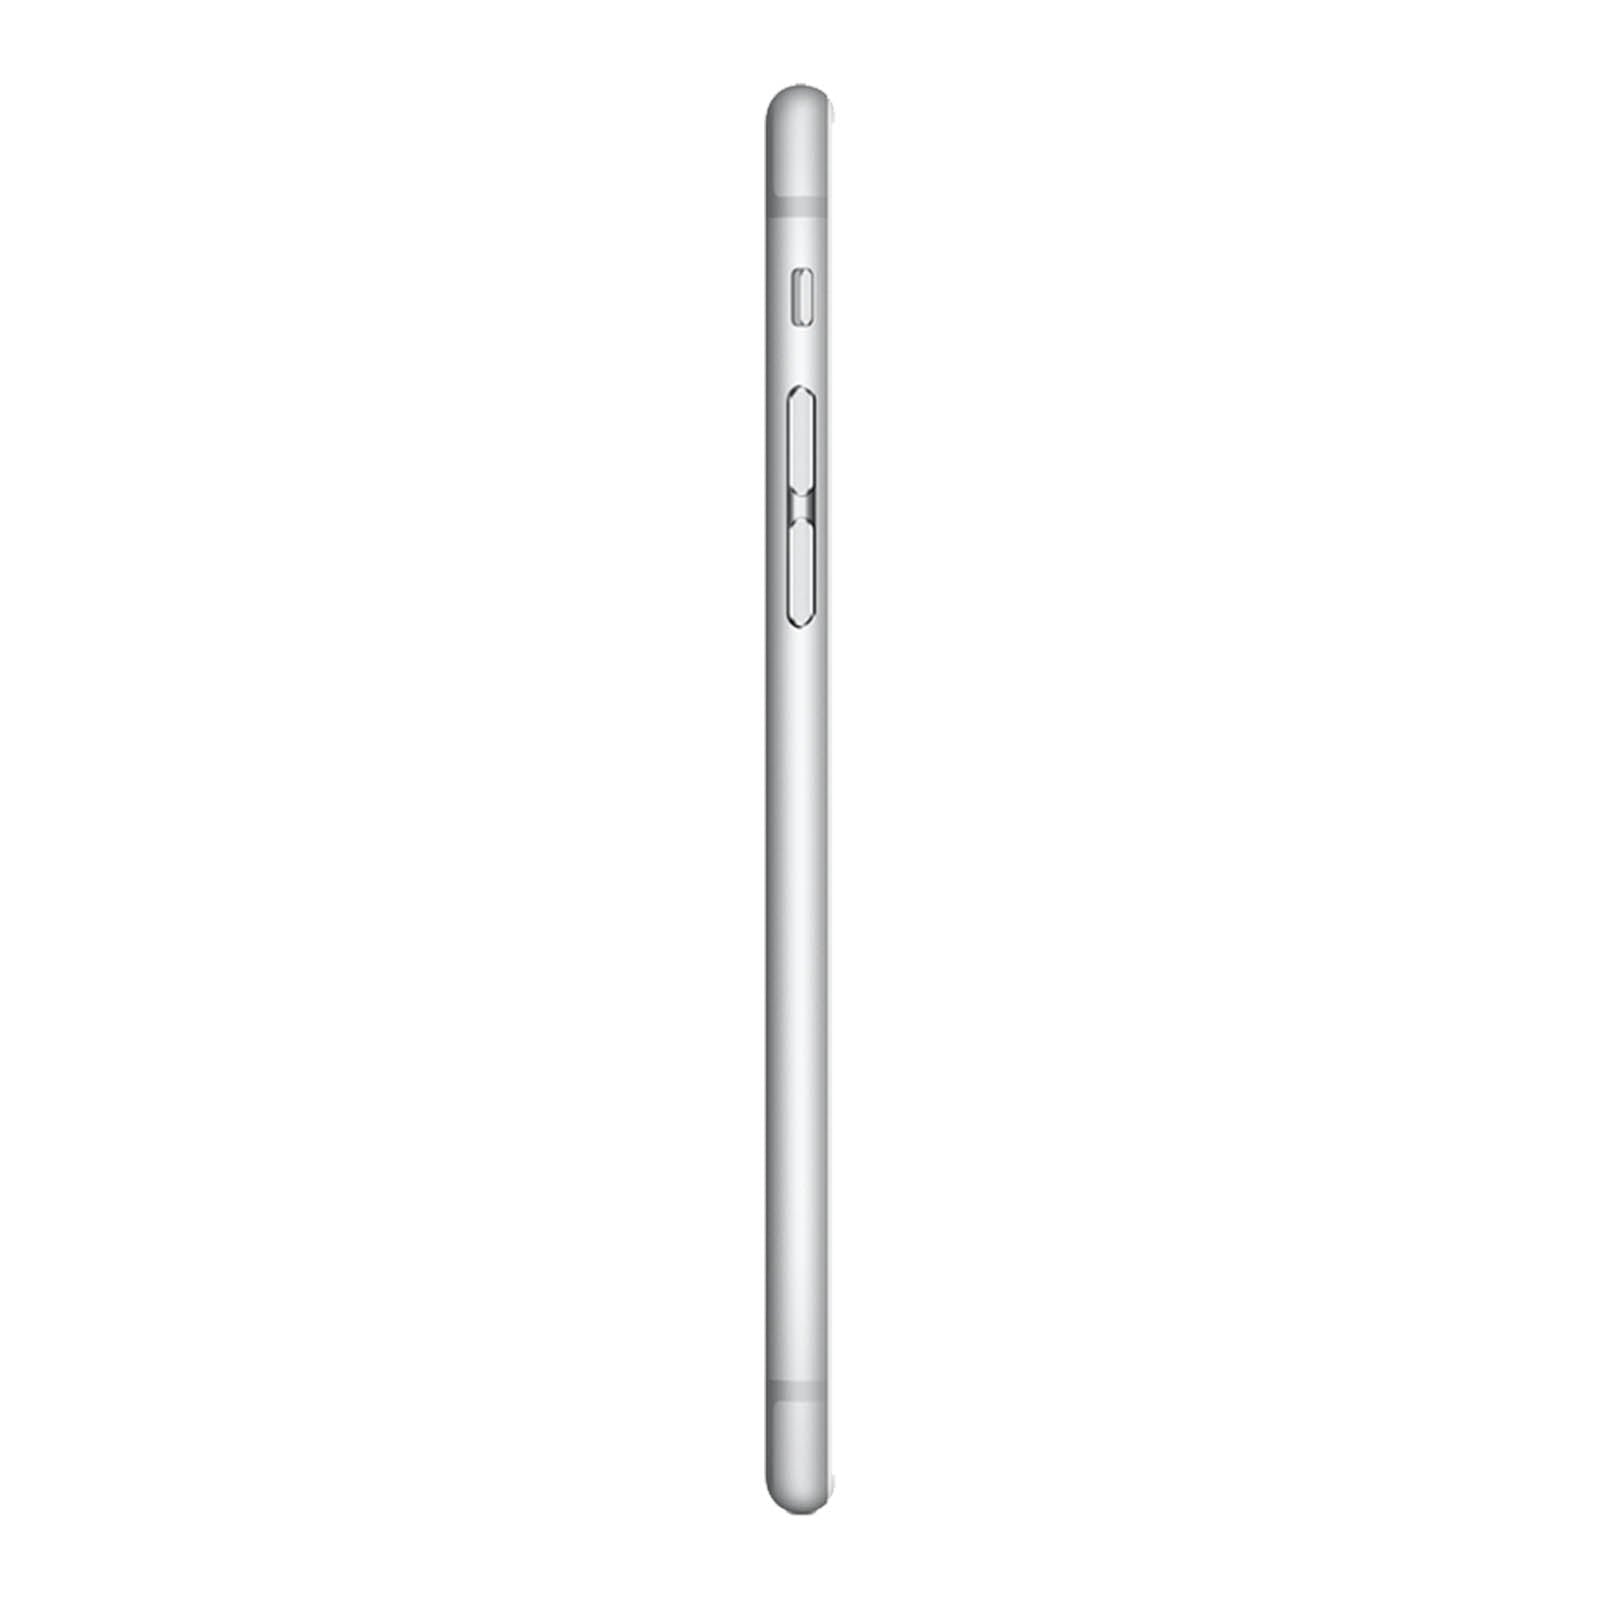 Apple iPhone 6 32GB Silver Fair - Unlocked